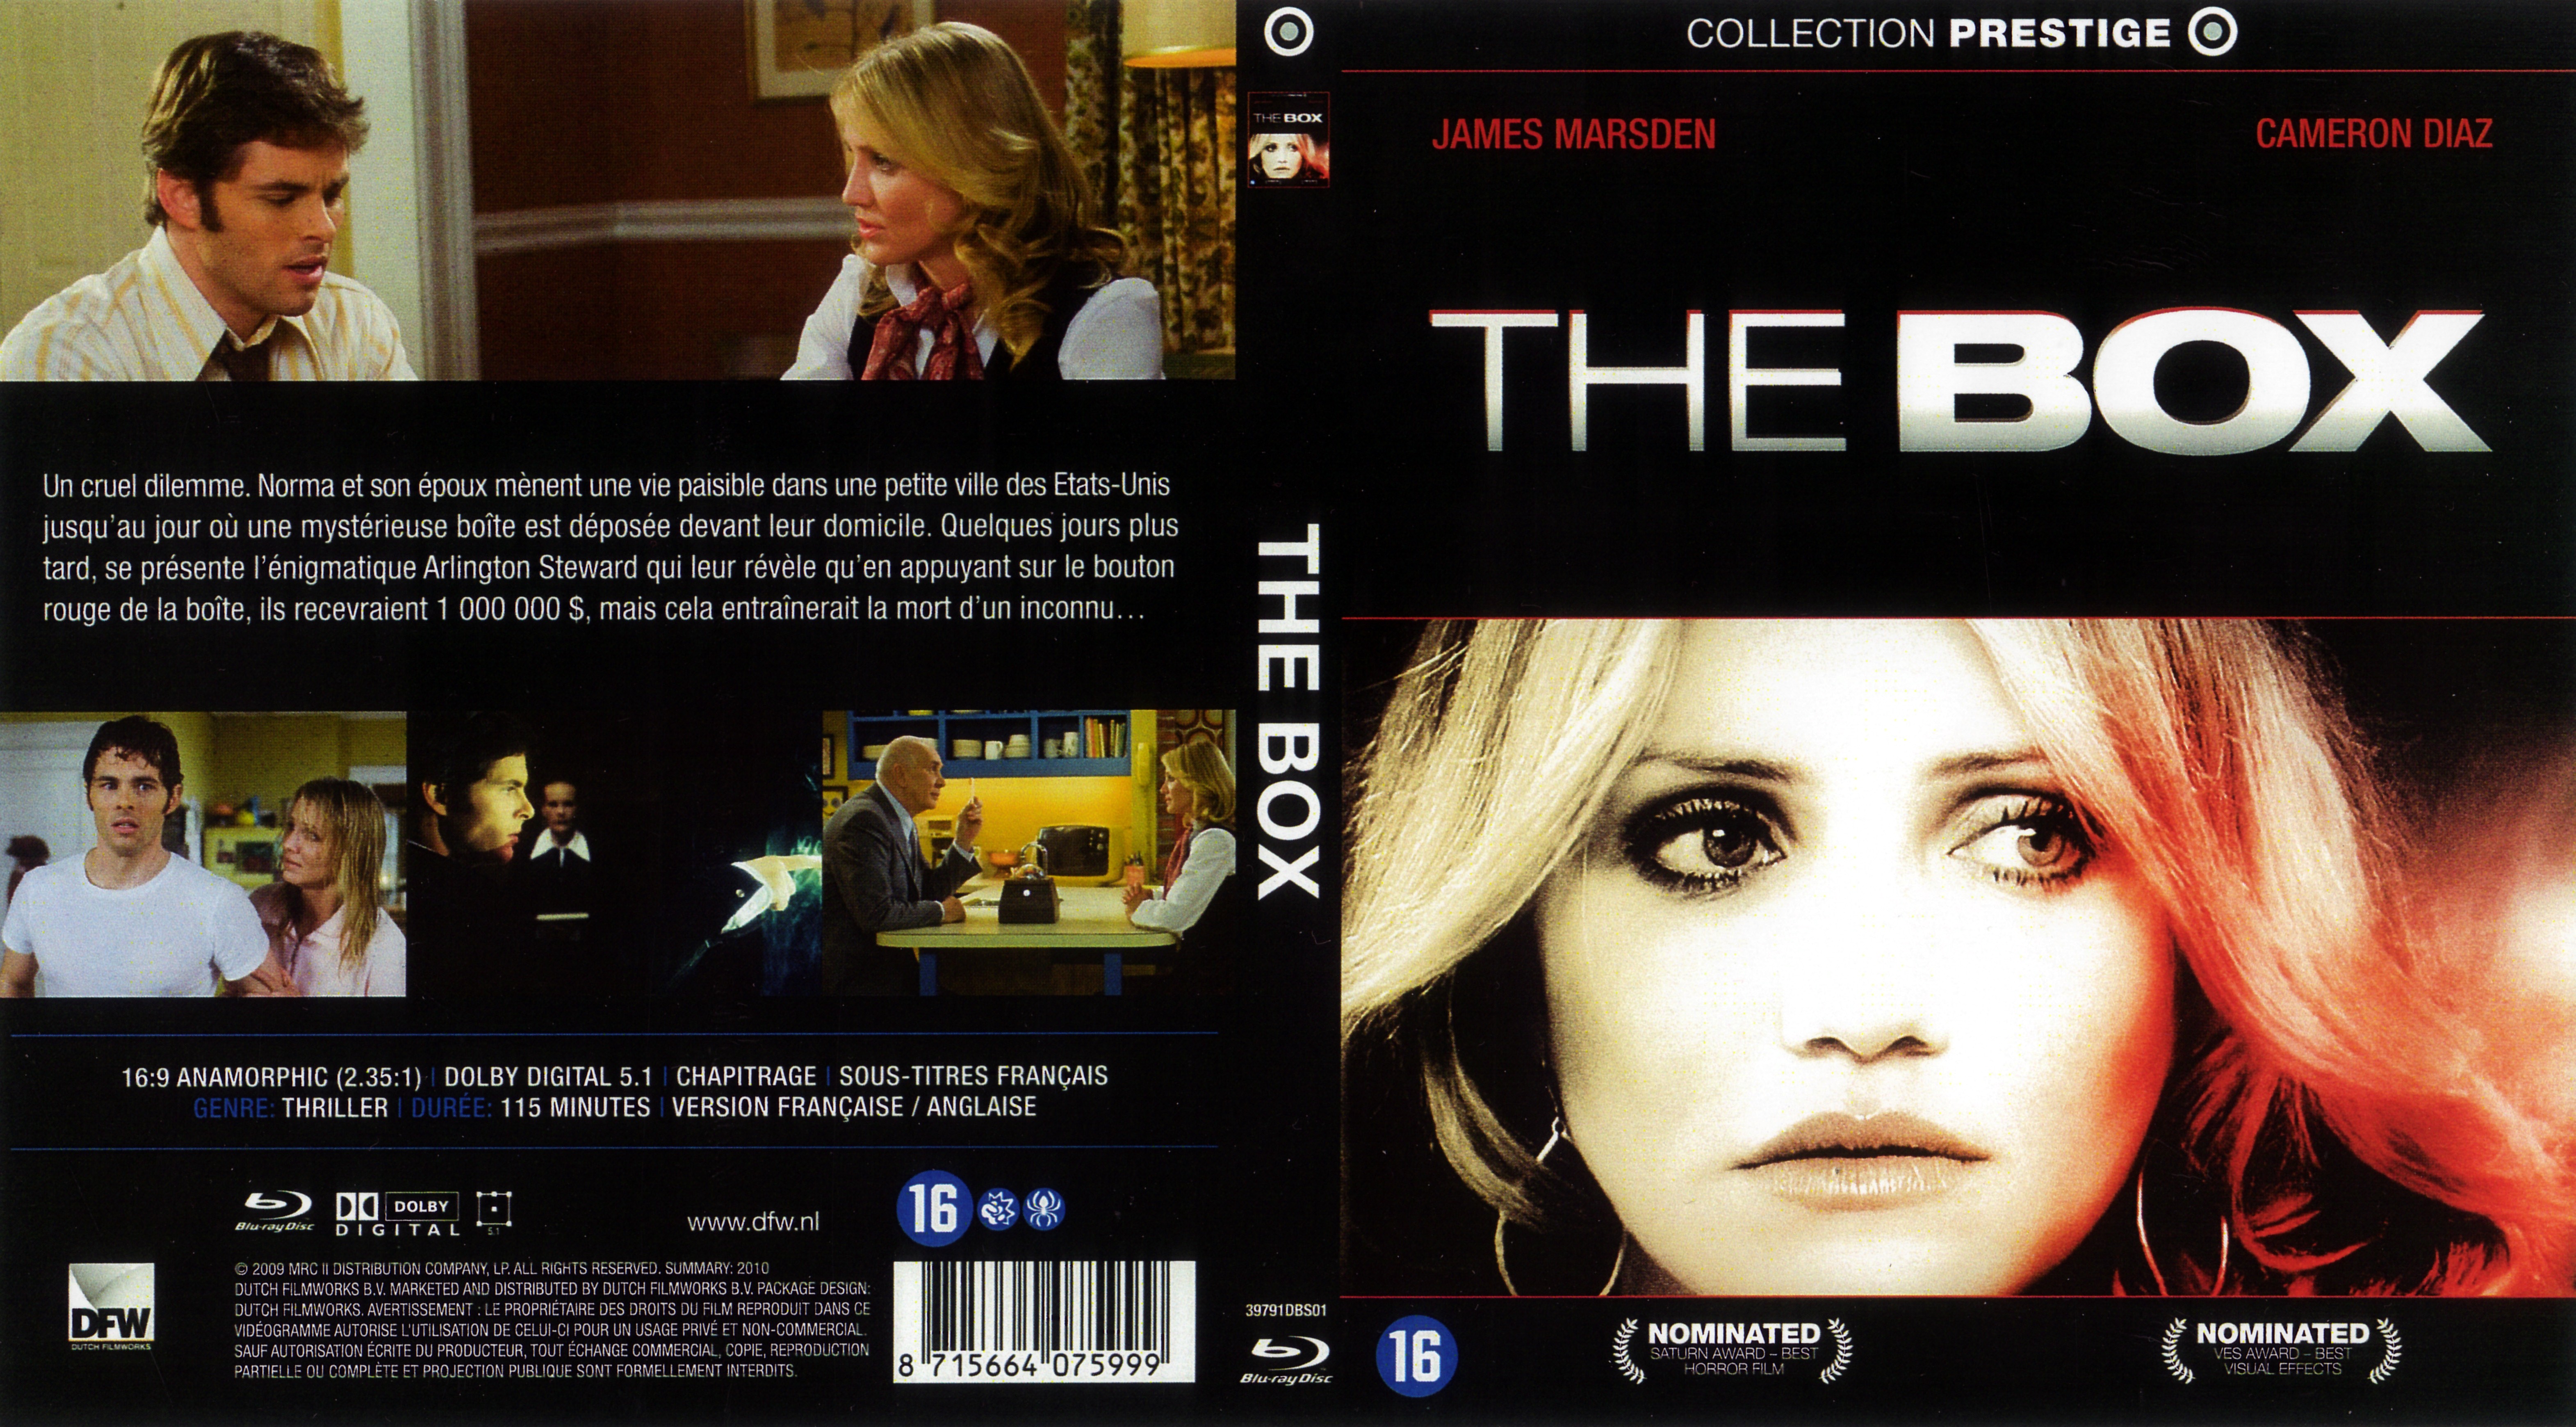 Jaquette DVD de The box (BLU-RAY) v2 - Cinéma Passion